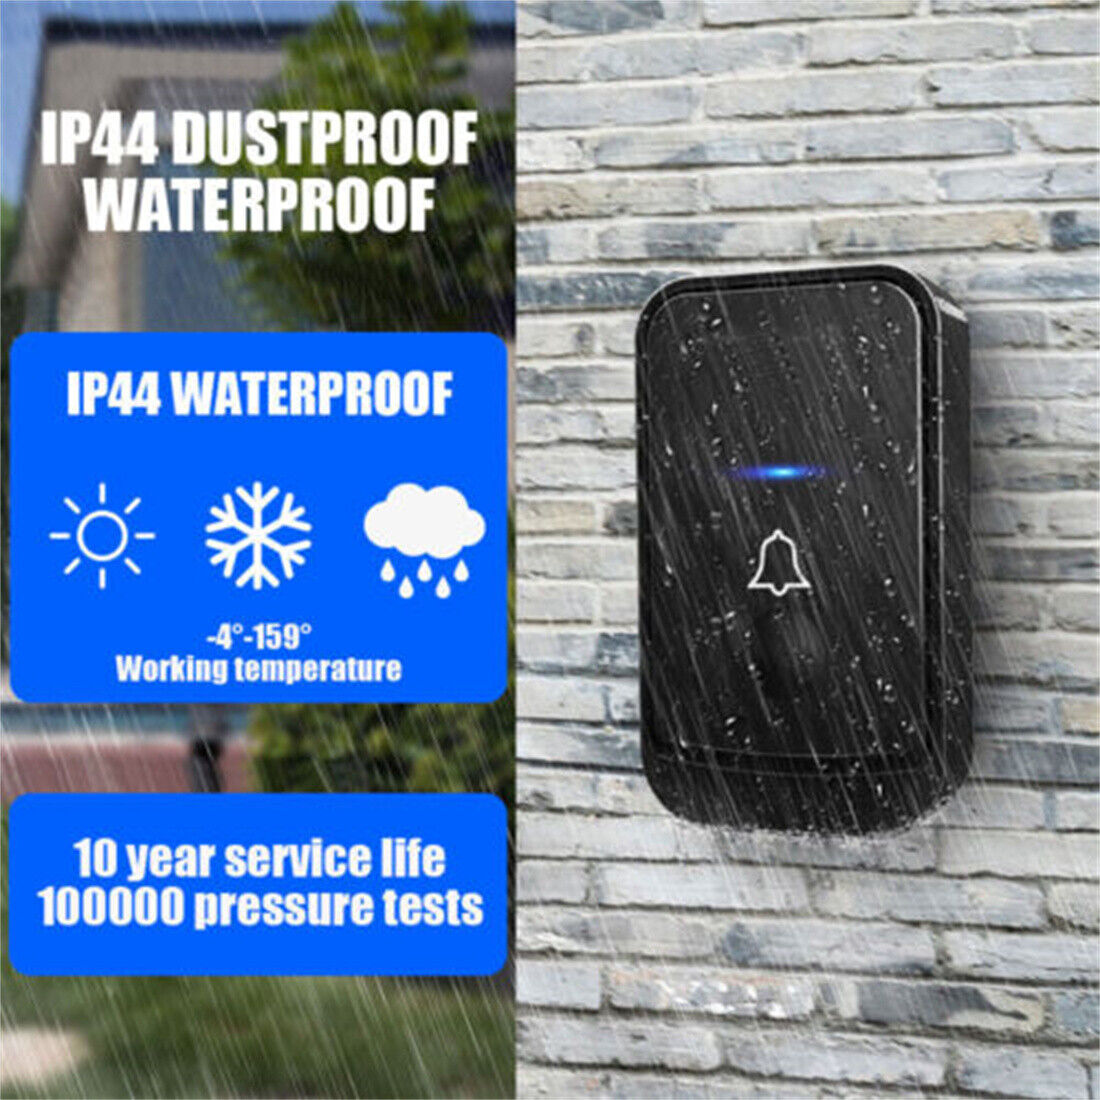 UK's Favorite: Waterproof Wireless Doorbell - 1000ft Range, Easy Plug-In!